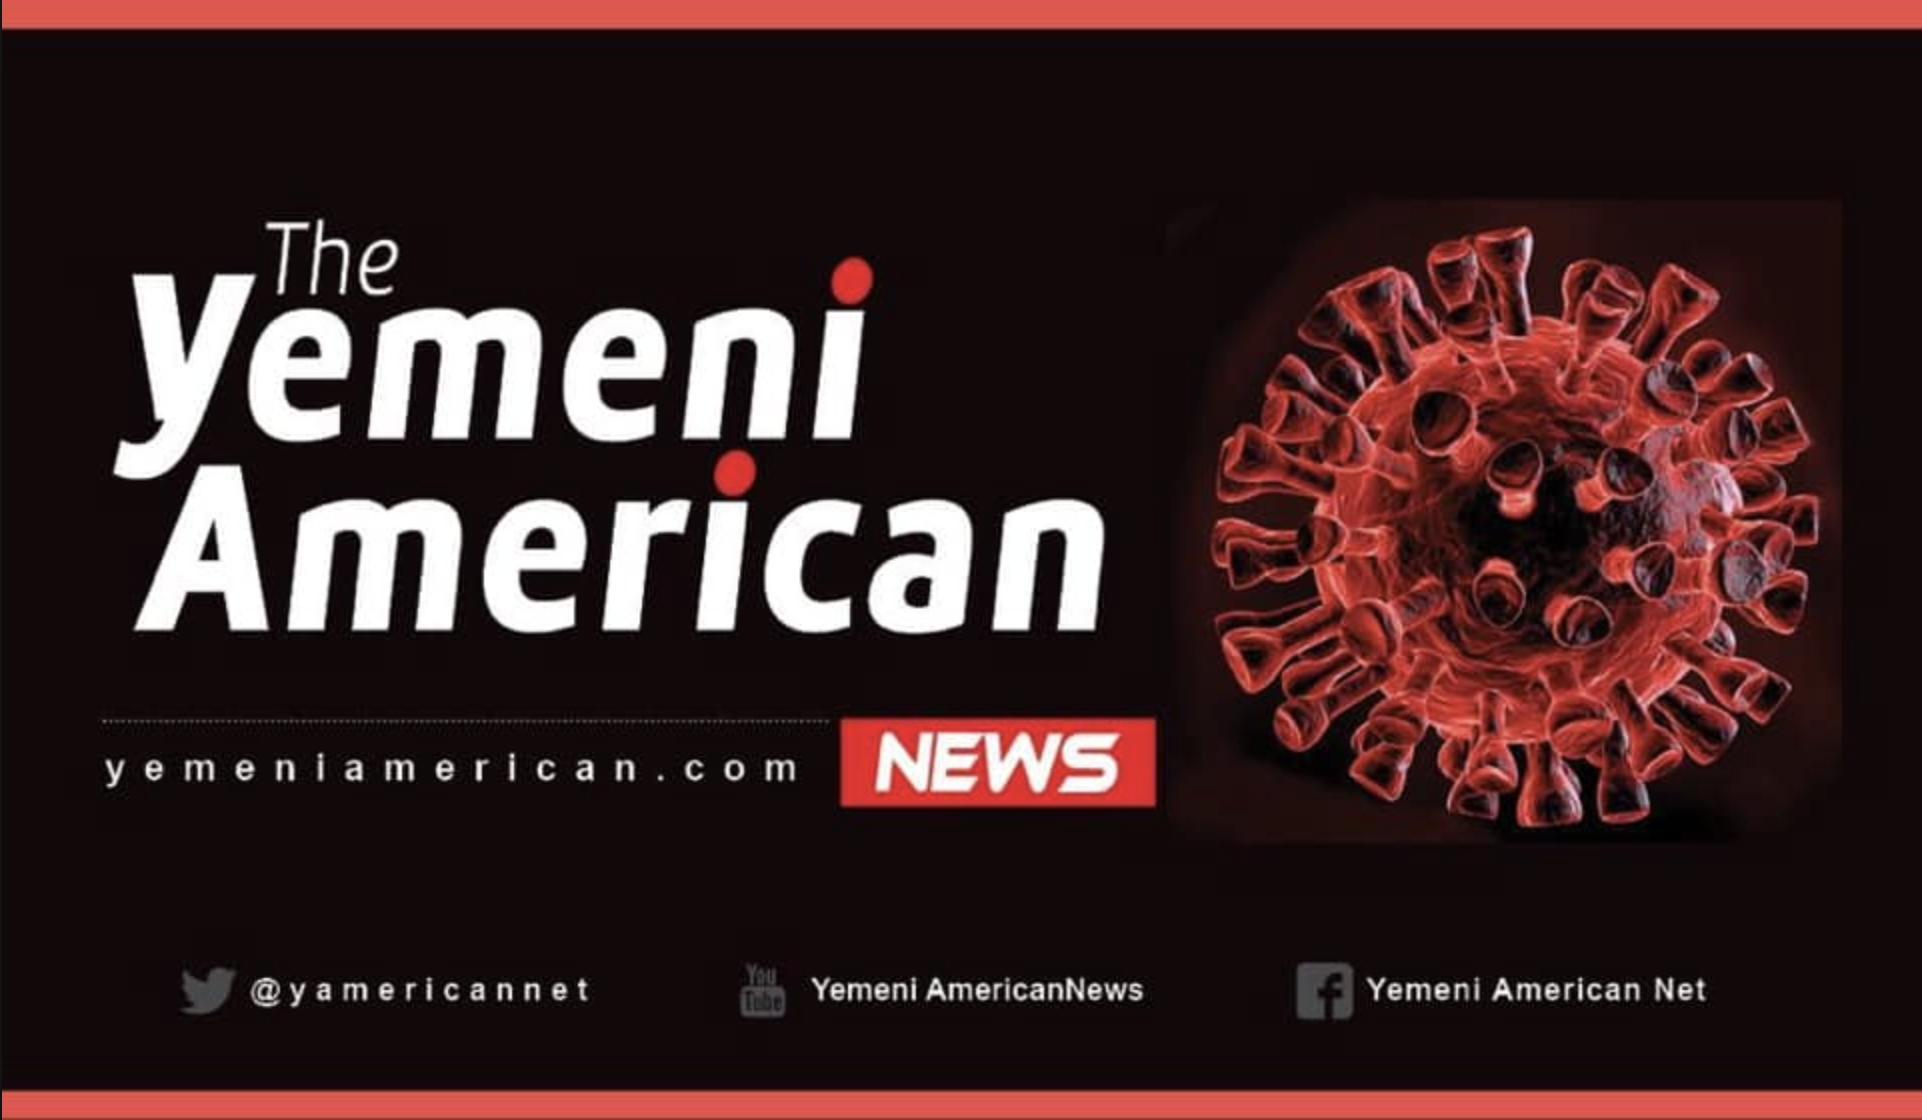 Yemeni American News Live Blog on Covid19